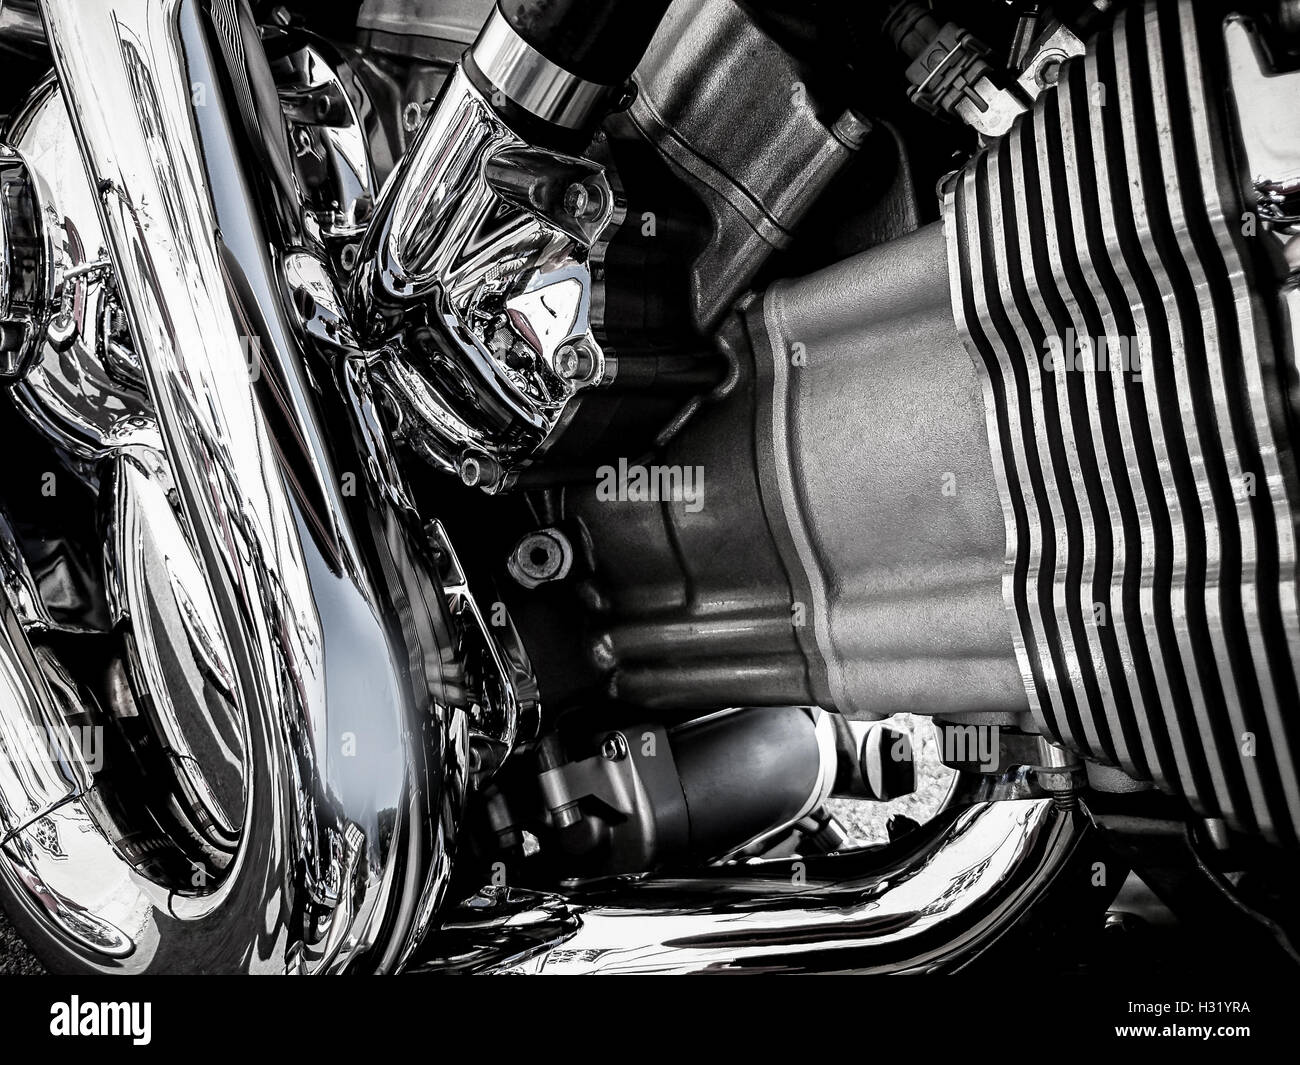 Motorcycle engine closeup as background, horizontal Stock Photo